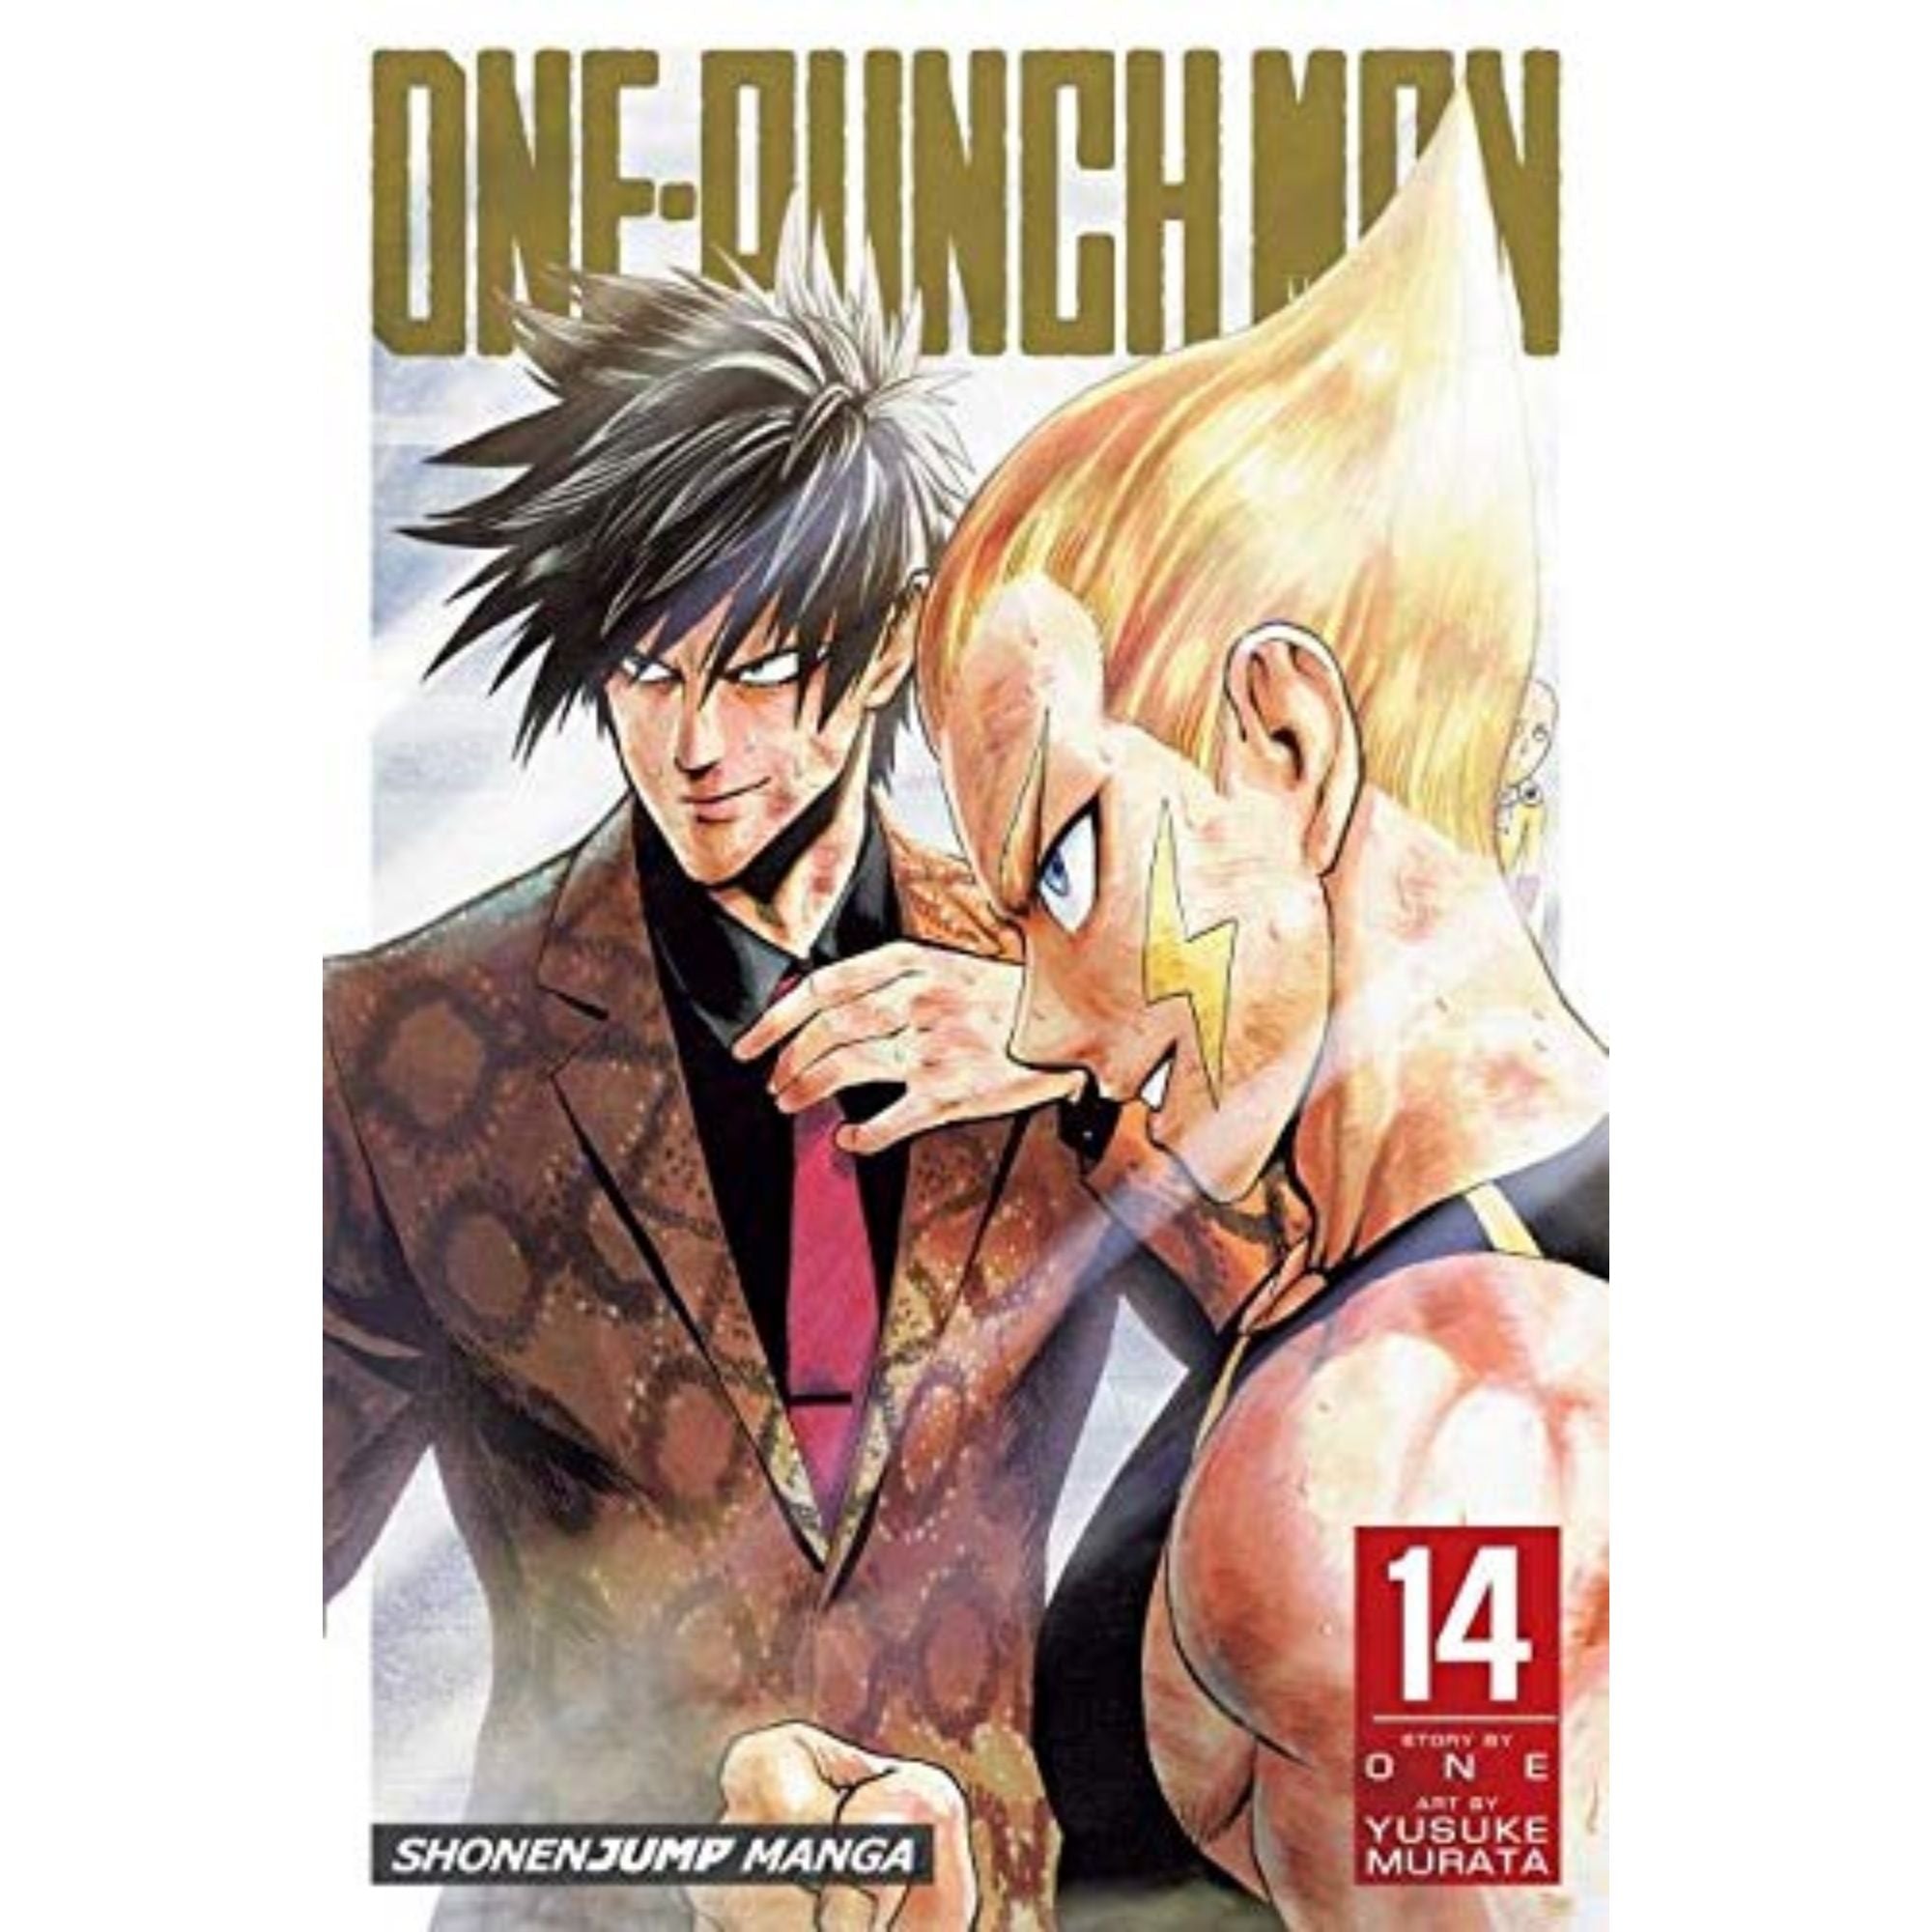 One-Punch Man, Vol. 11